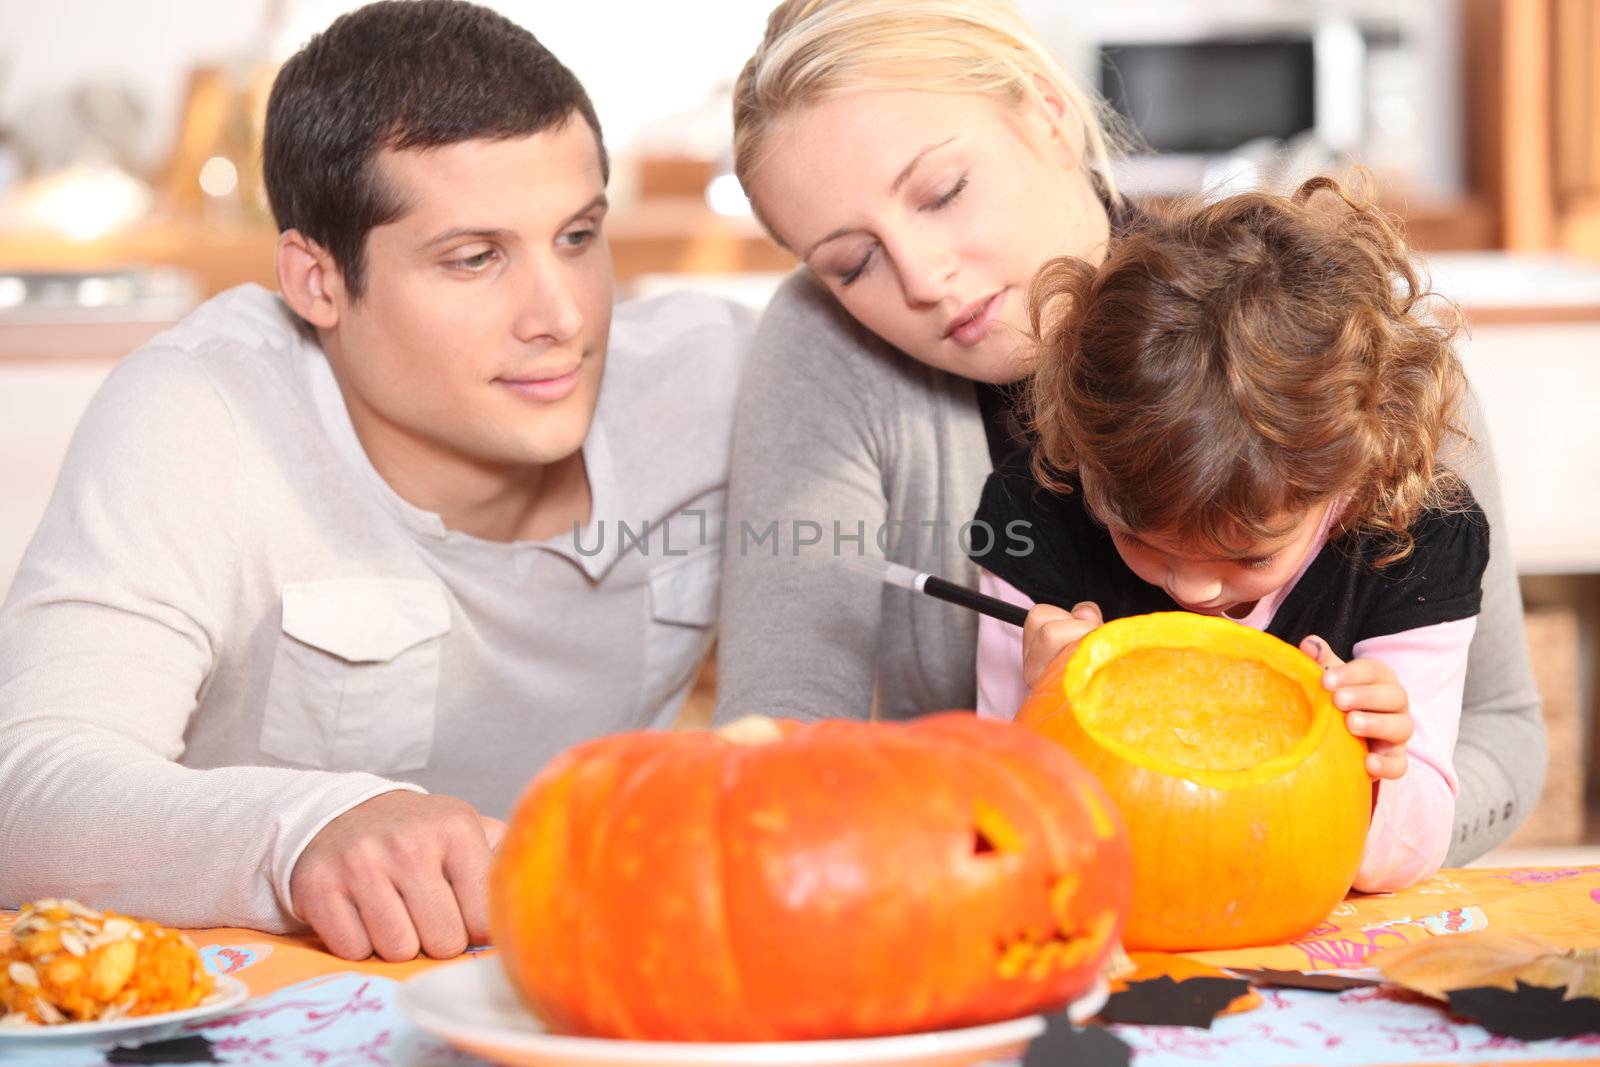 Family preparing pumpkins for Halloween by phovoir